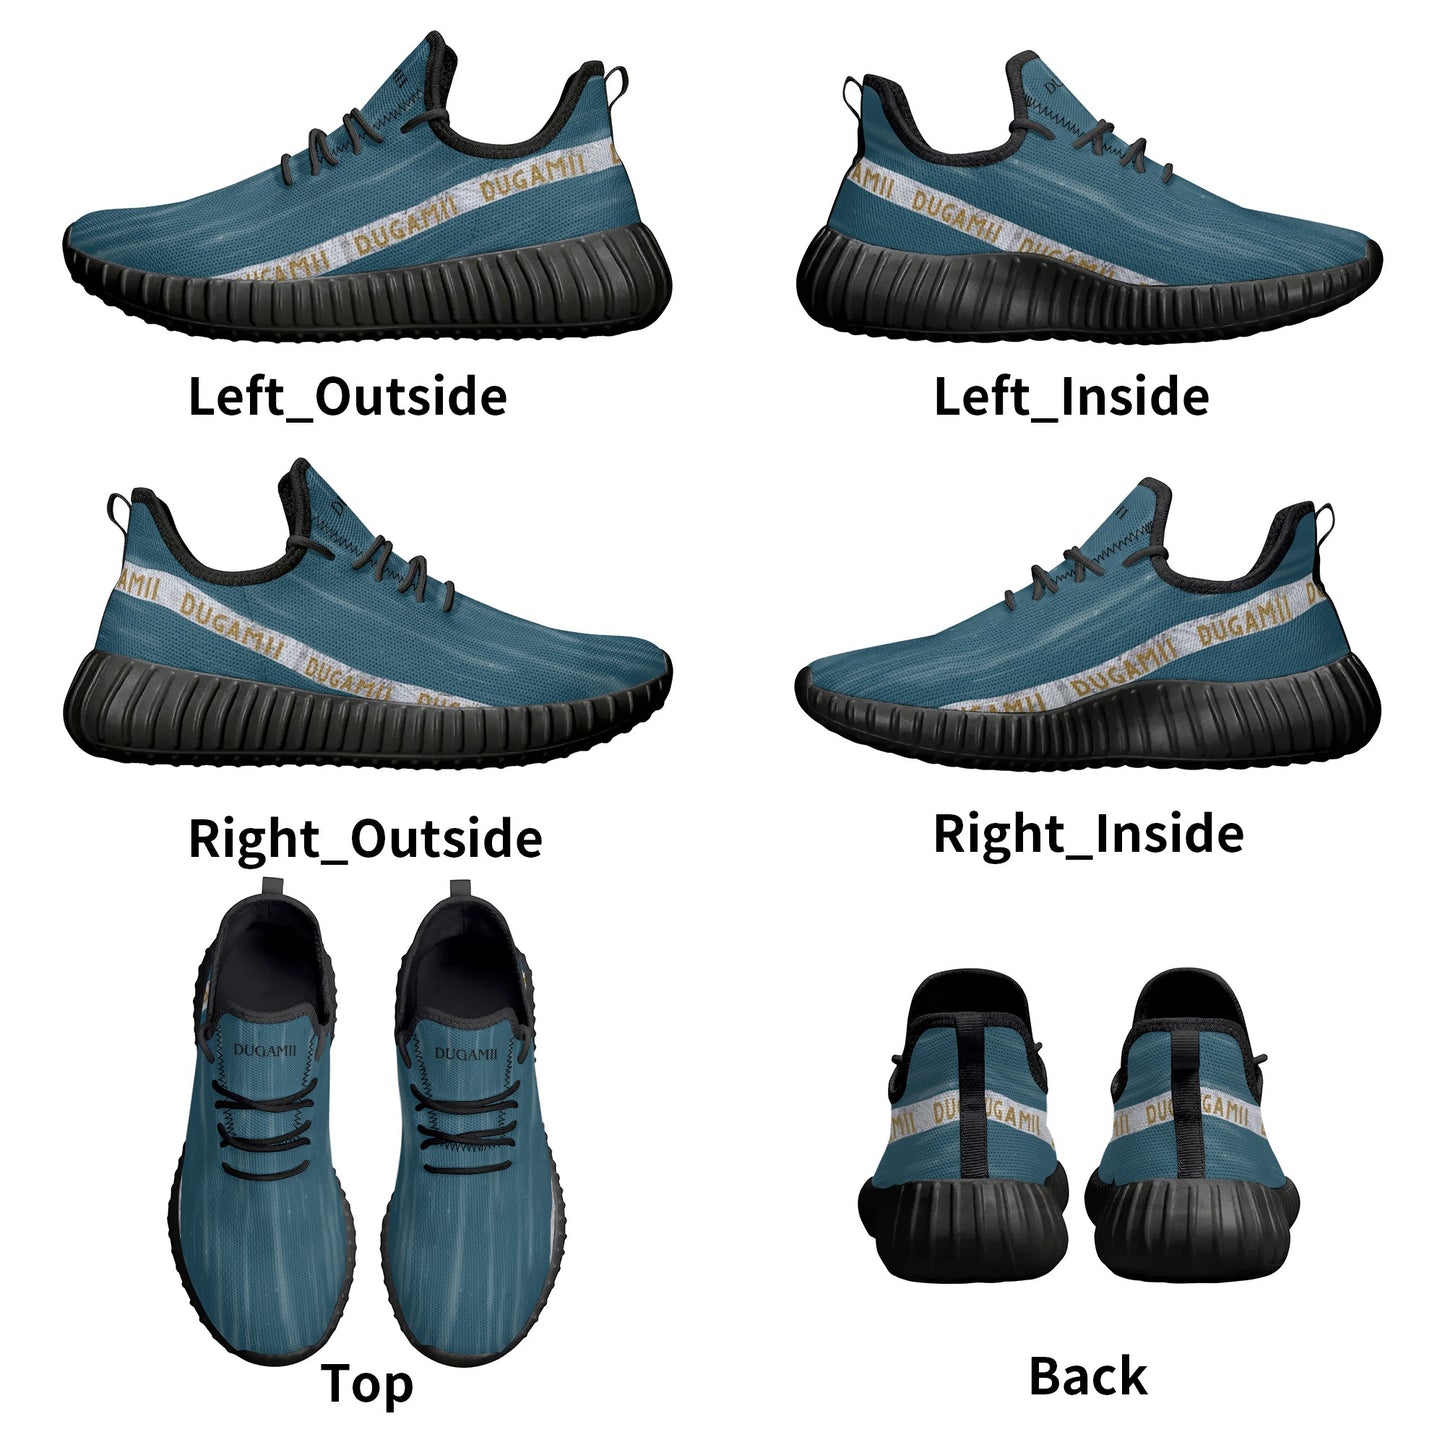 DuGamii Men's Signature Mesh Knit Blue Training Sneakers